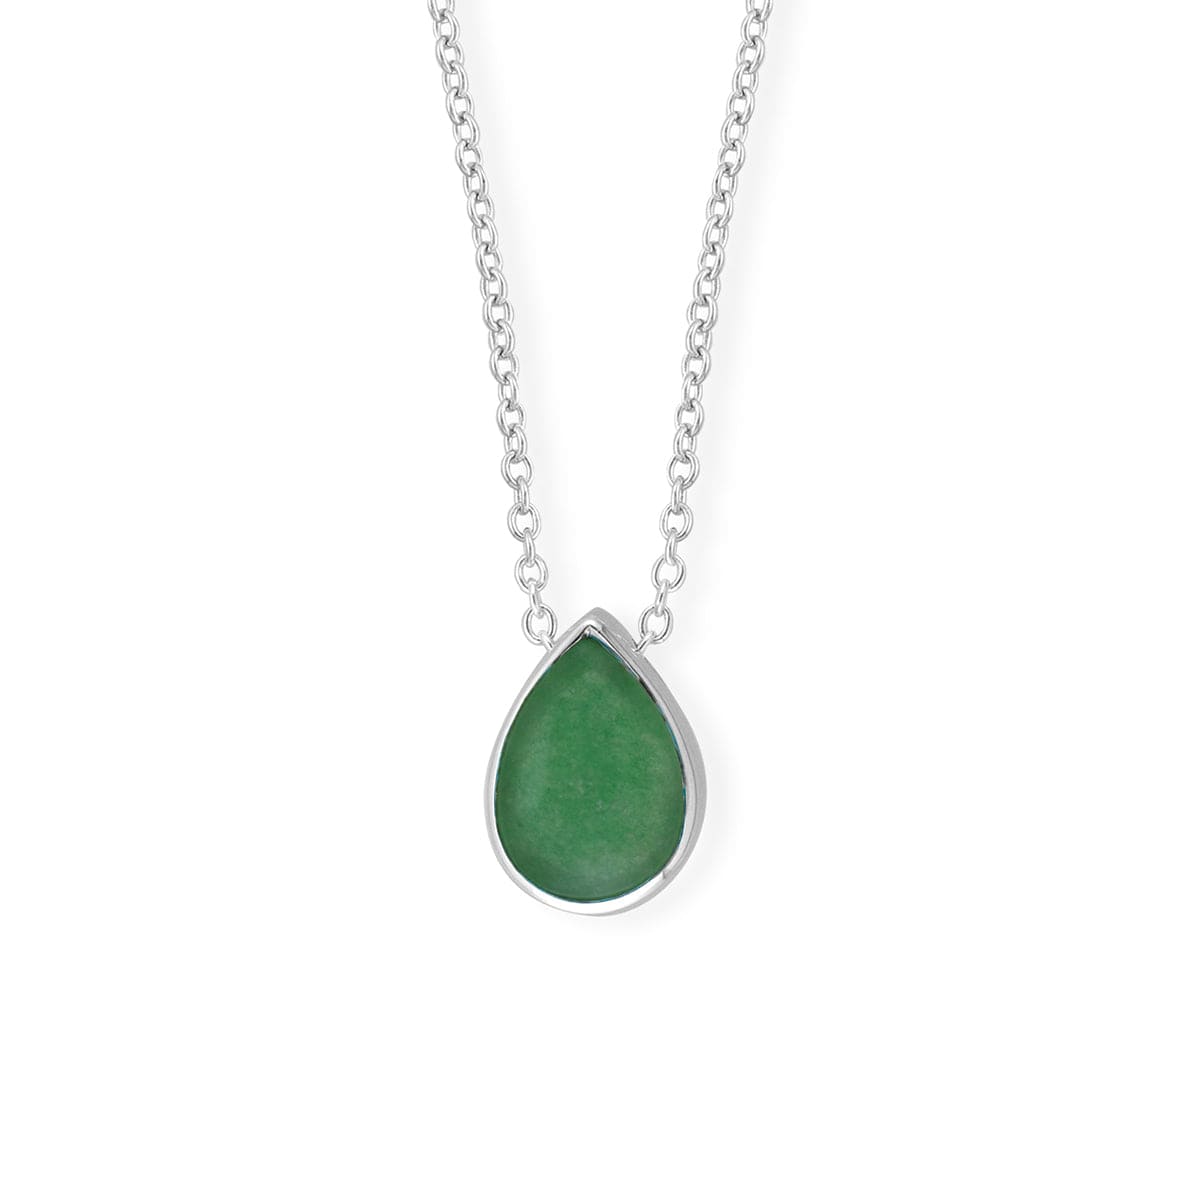 Boma Jewelry Necklaces Green Jade / Sterling Silver Treasured Teardrop Pendant Necklace